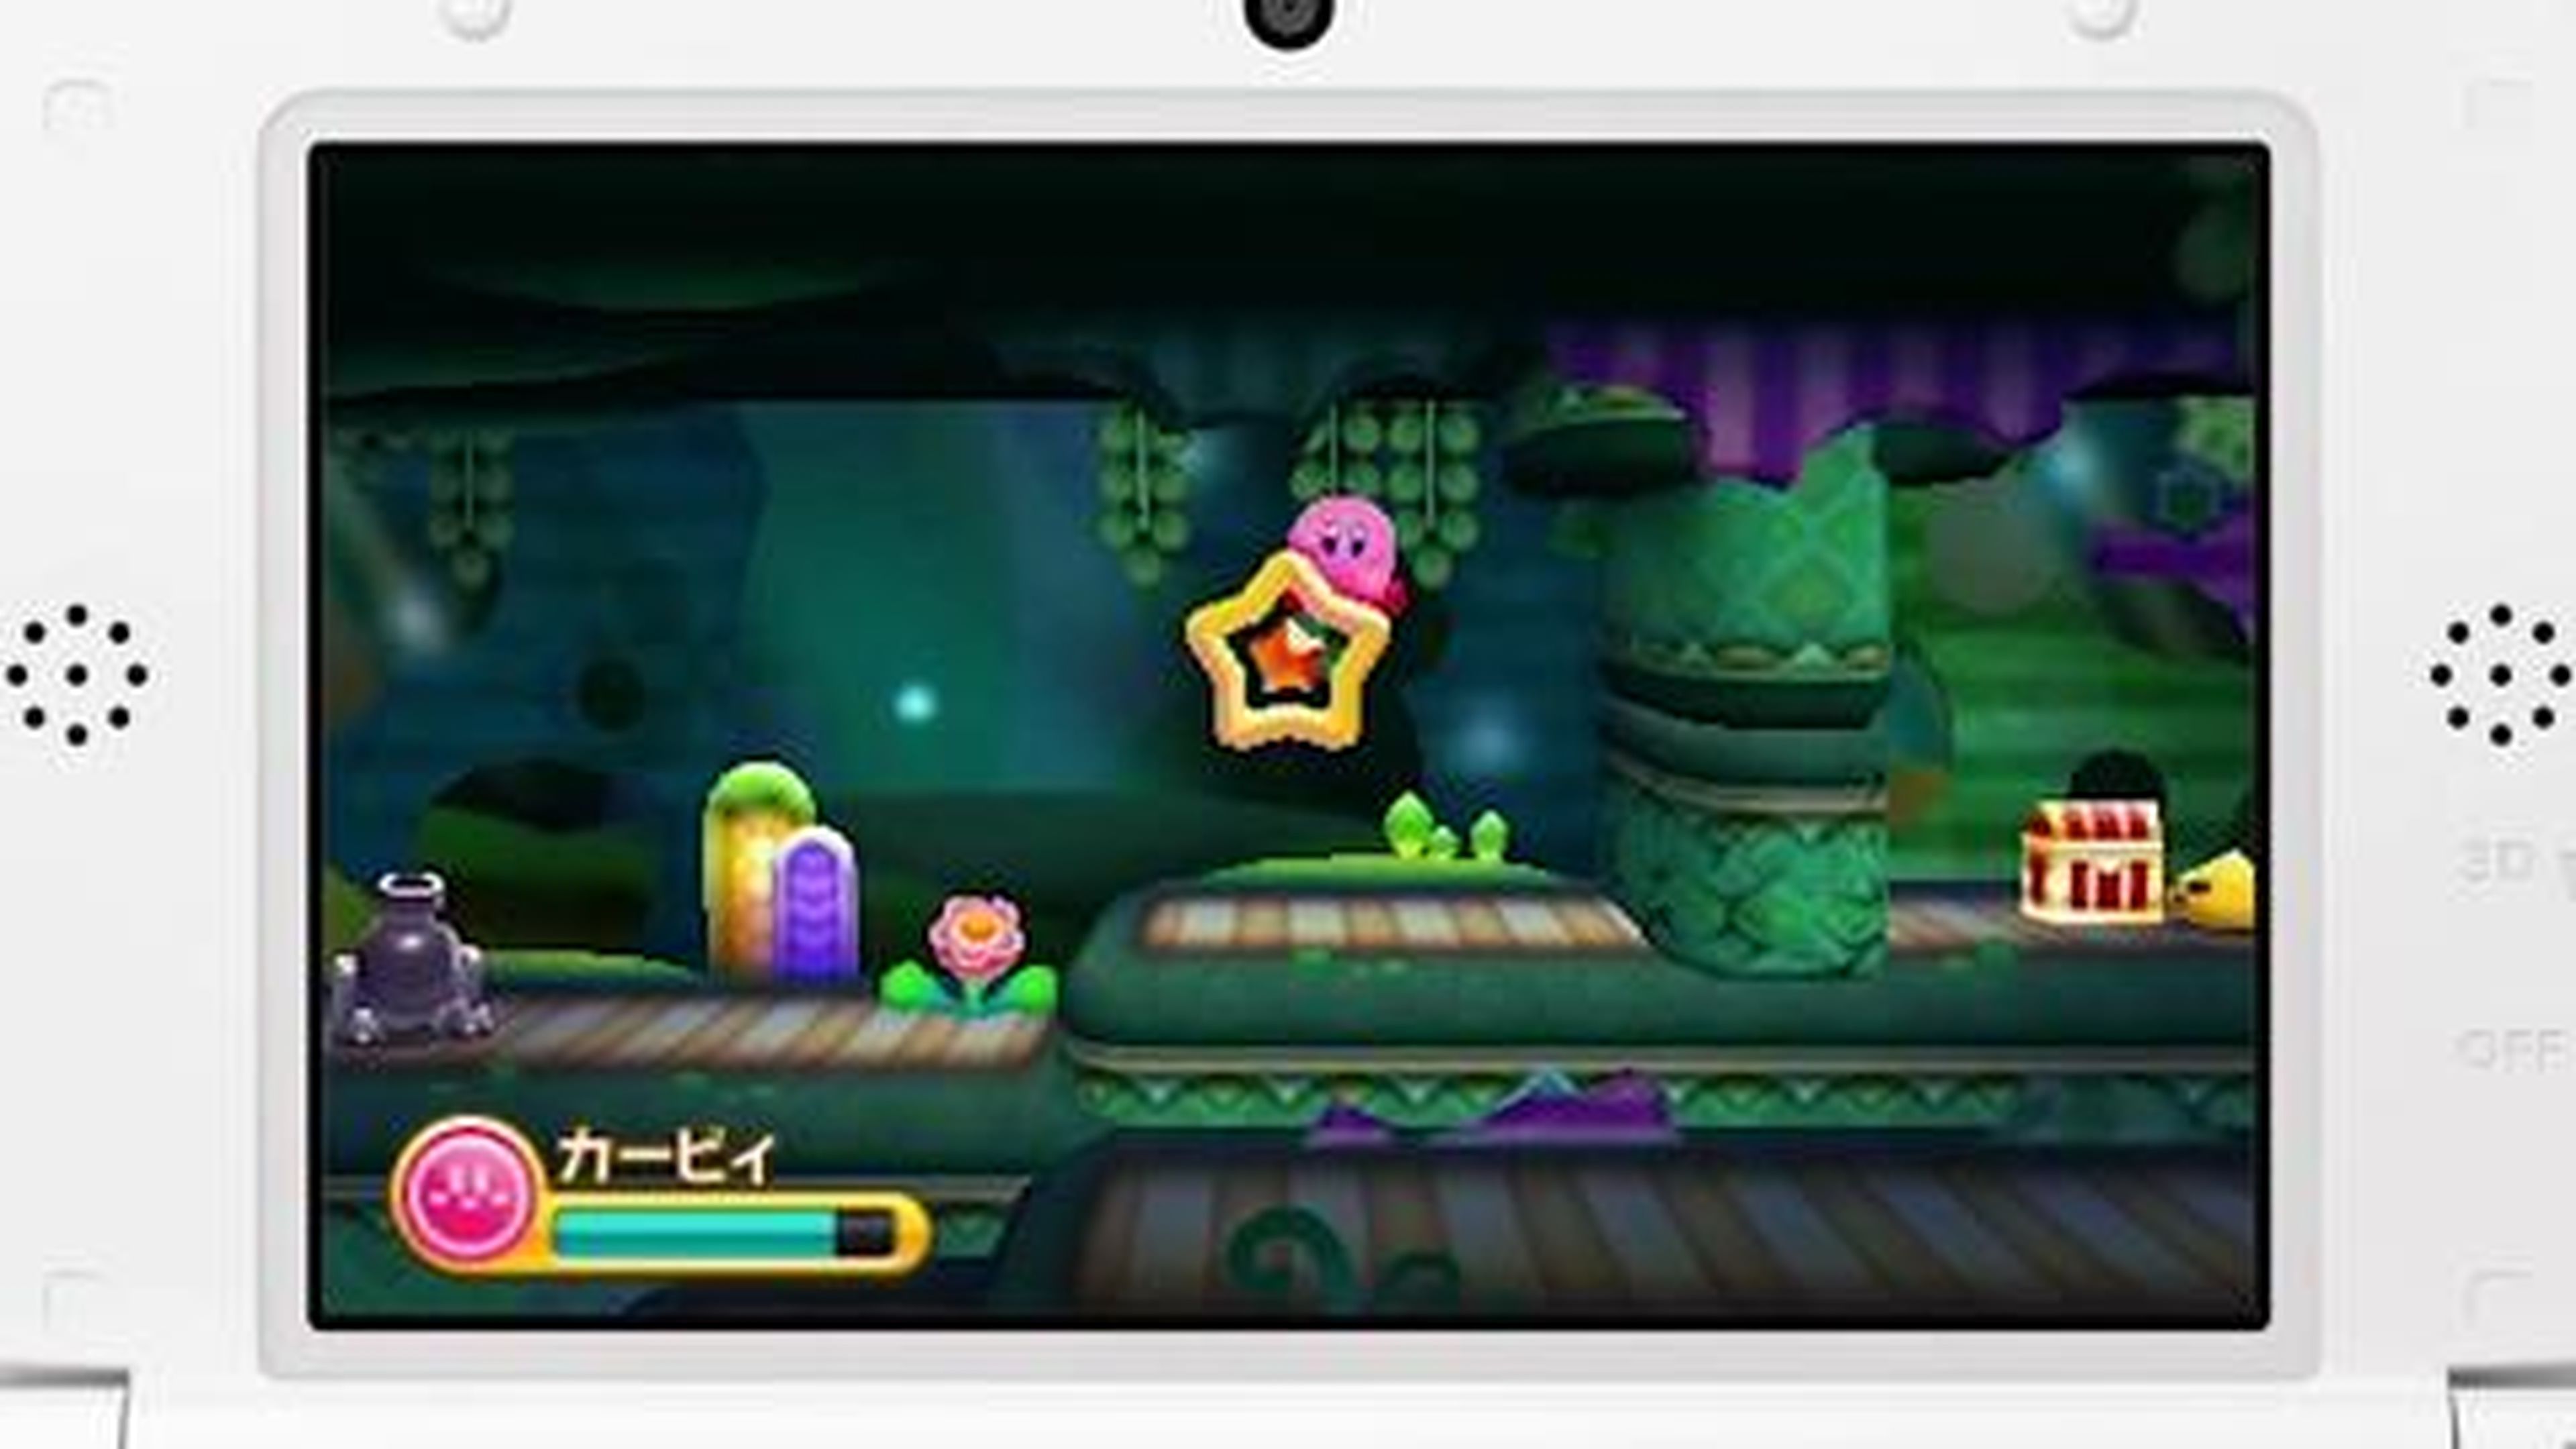 Primer gameplay de Kirby Triple Deluxe en HobbyConsolas.com